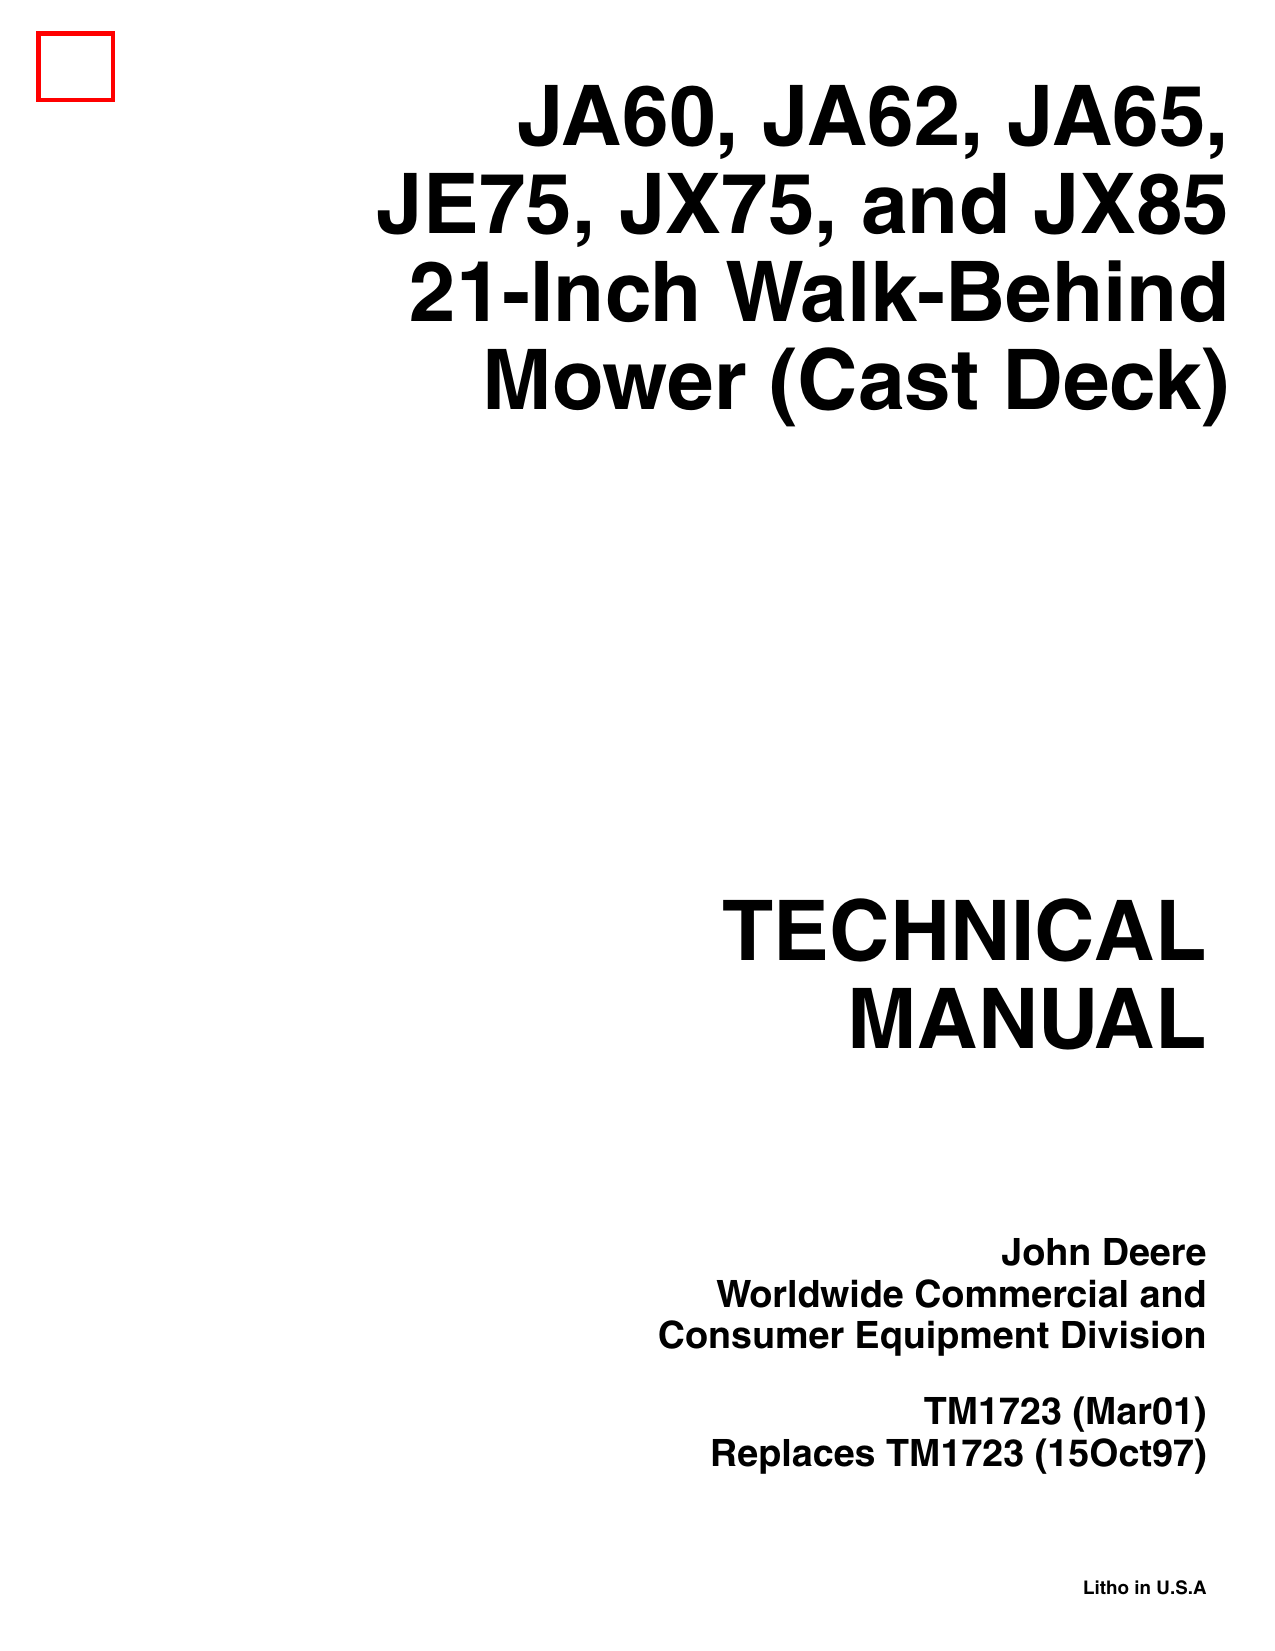 John Deere JA60, JA62, JA65, JE75, JX75 walk-behind mower technical manual  Preview image 6